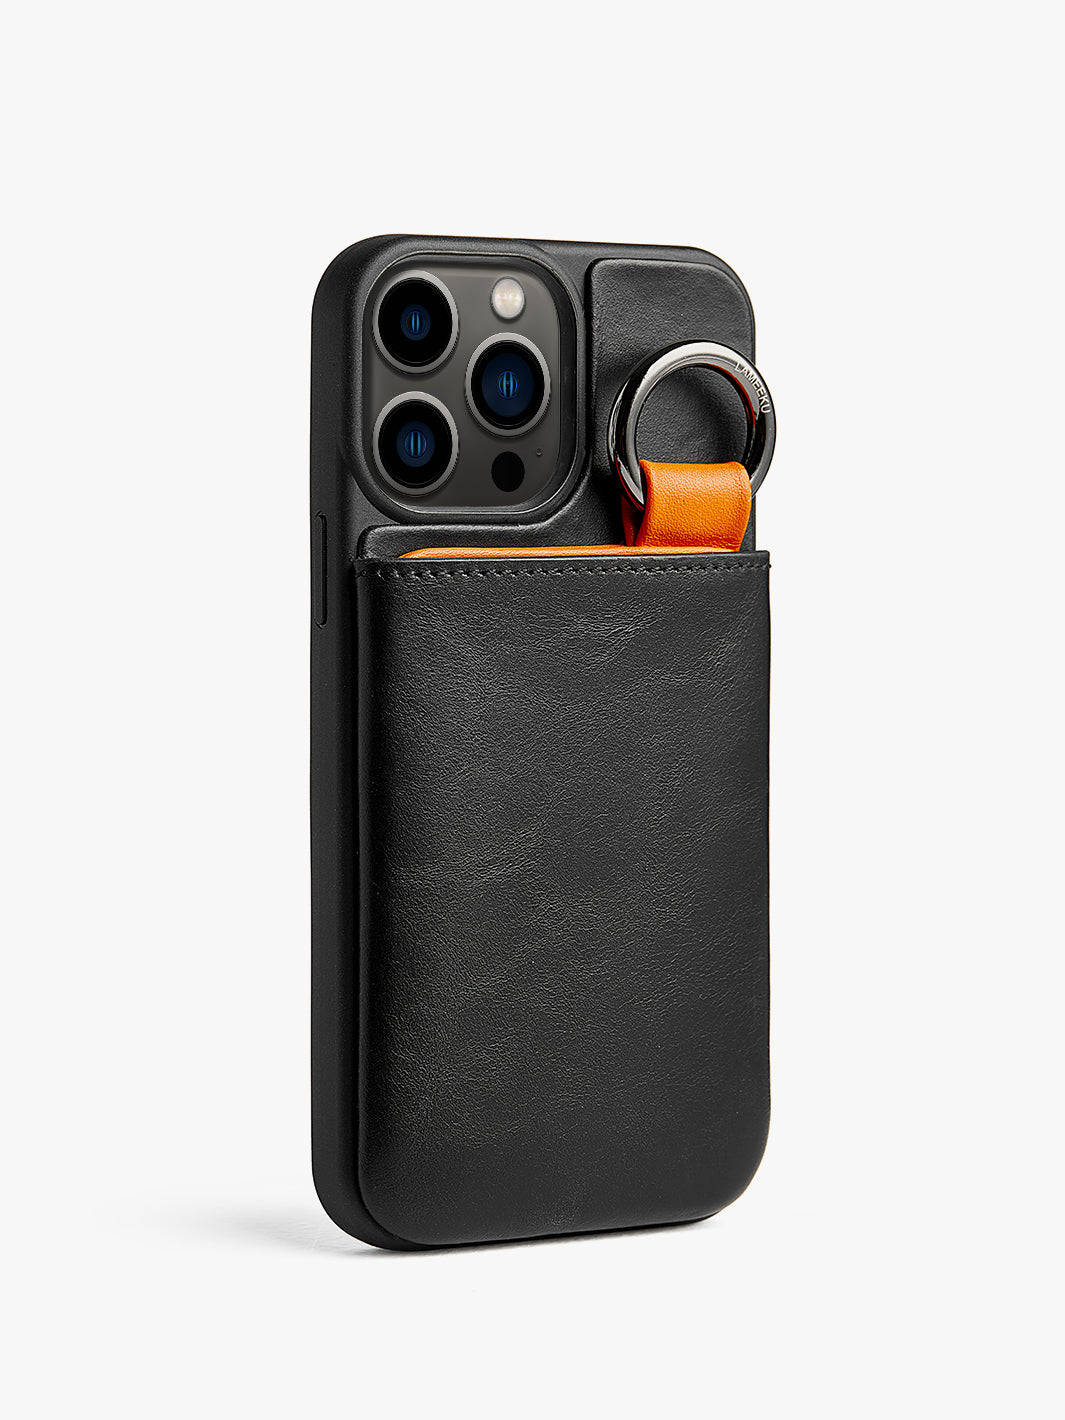 Custype phone case phone cover in black2